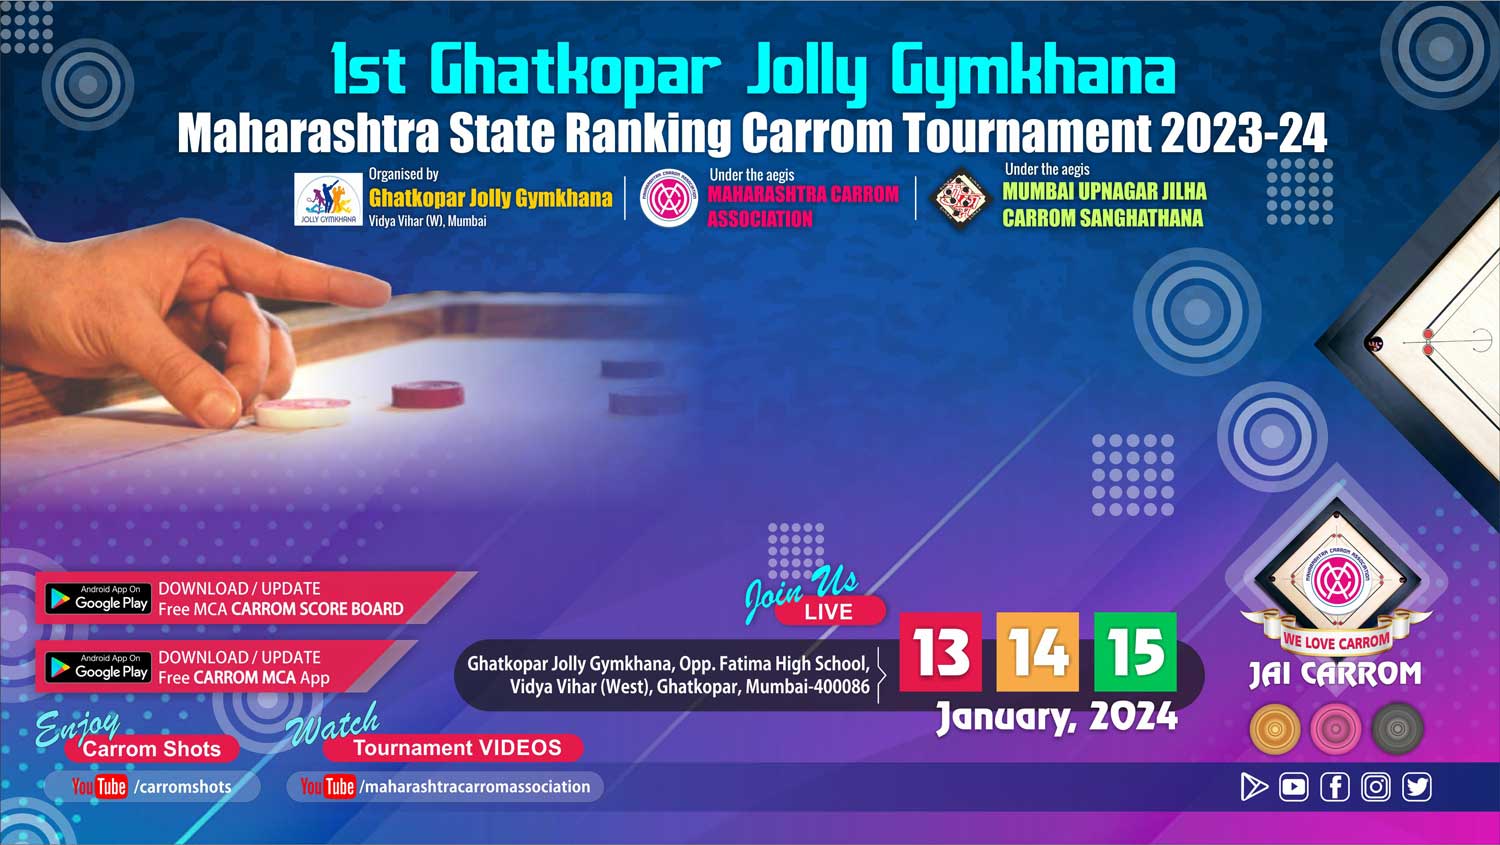 1st Ghatkopar Jolly Gymkhana Maharashtra State Ranking Carrom Tournament 2023-24